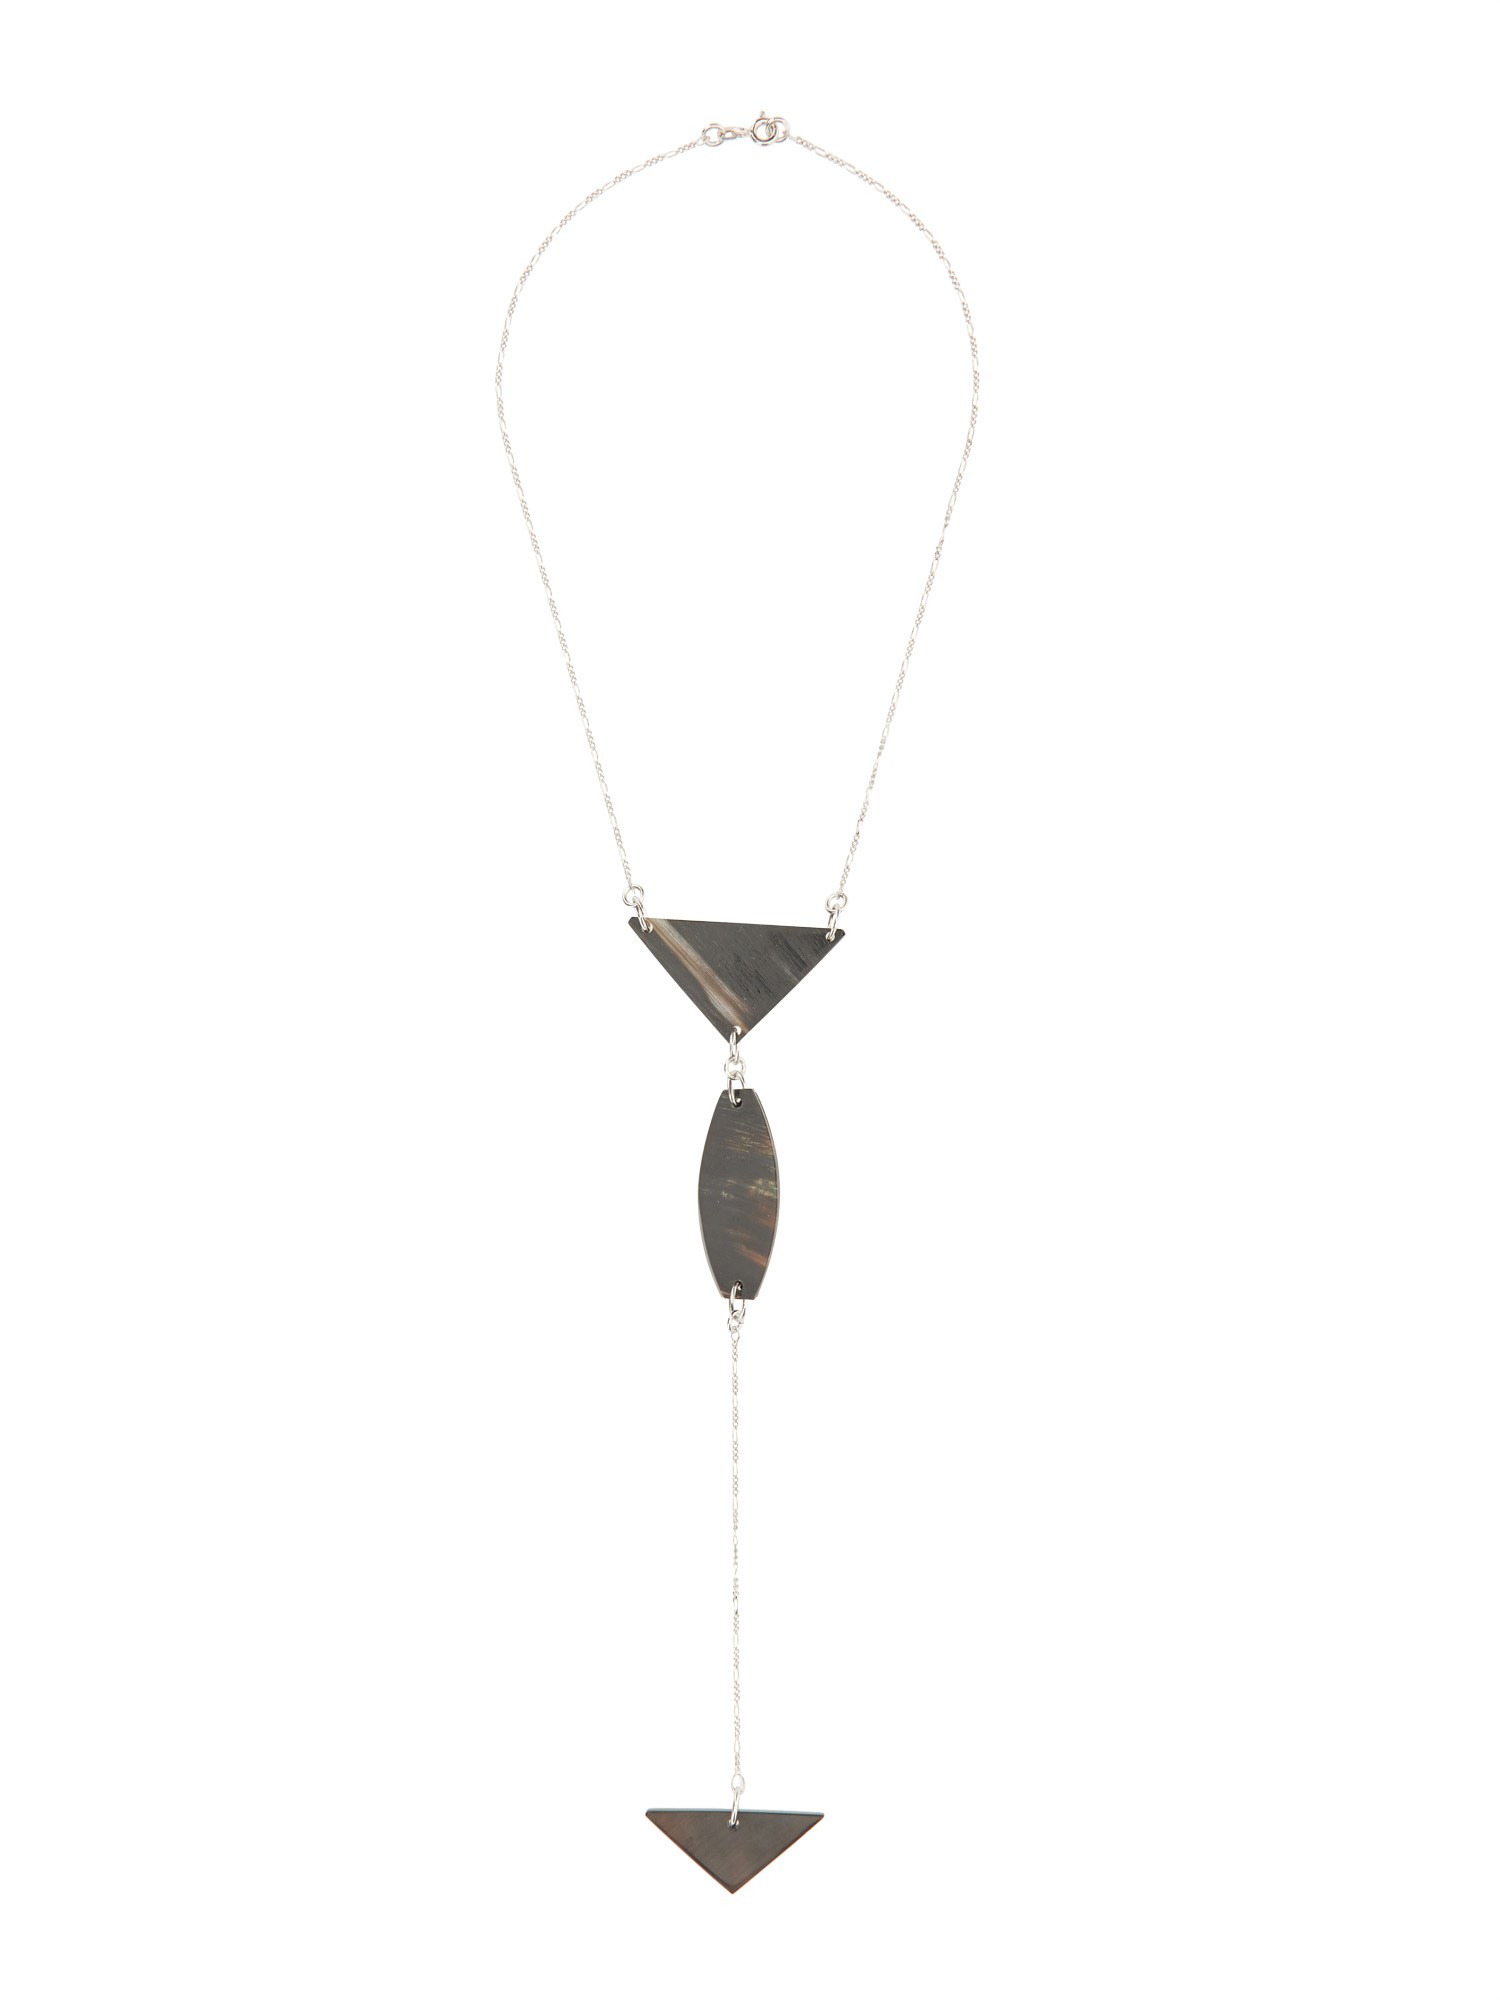 giagu design giagu design tie necklace with geometric elements